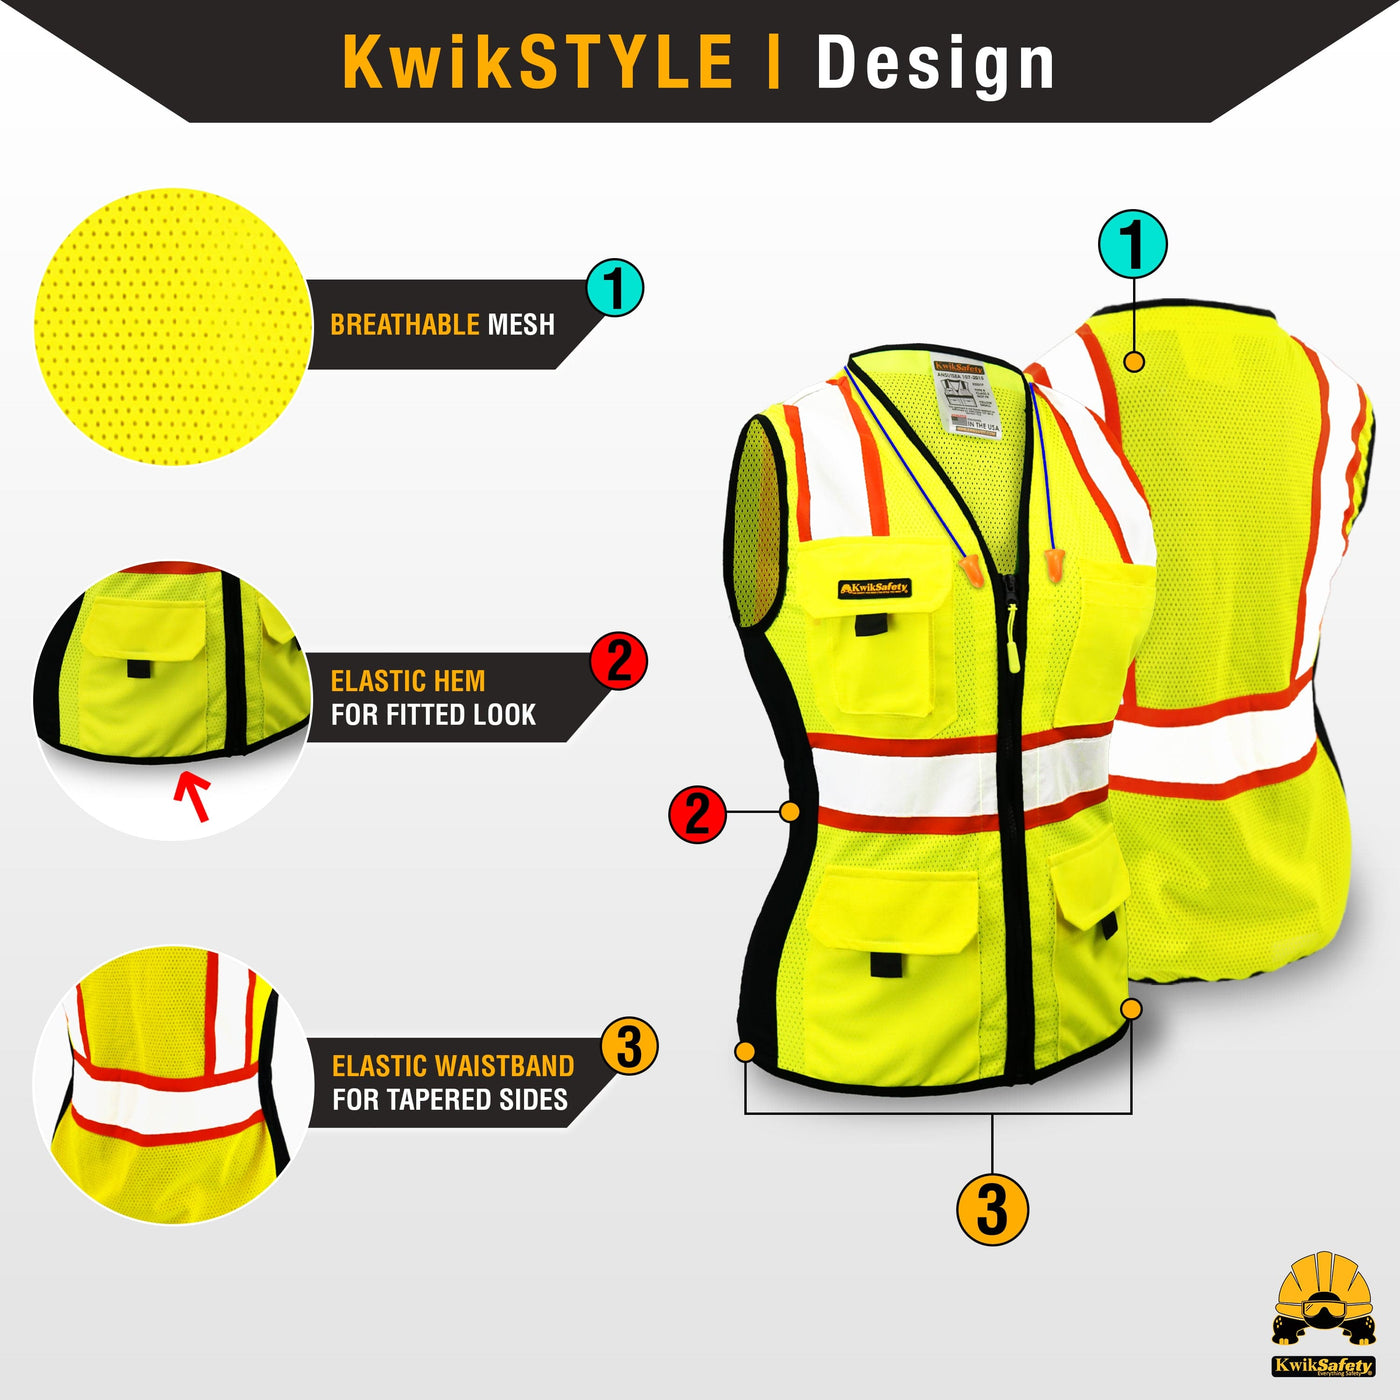 KwikSafety FIRST LADY Class 2 Safety Vest for Women ANSI Surveyor ...